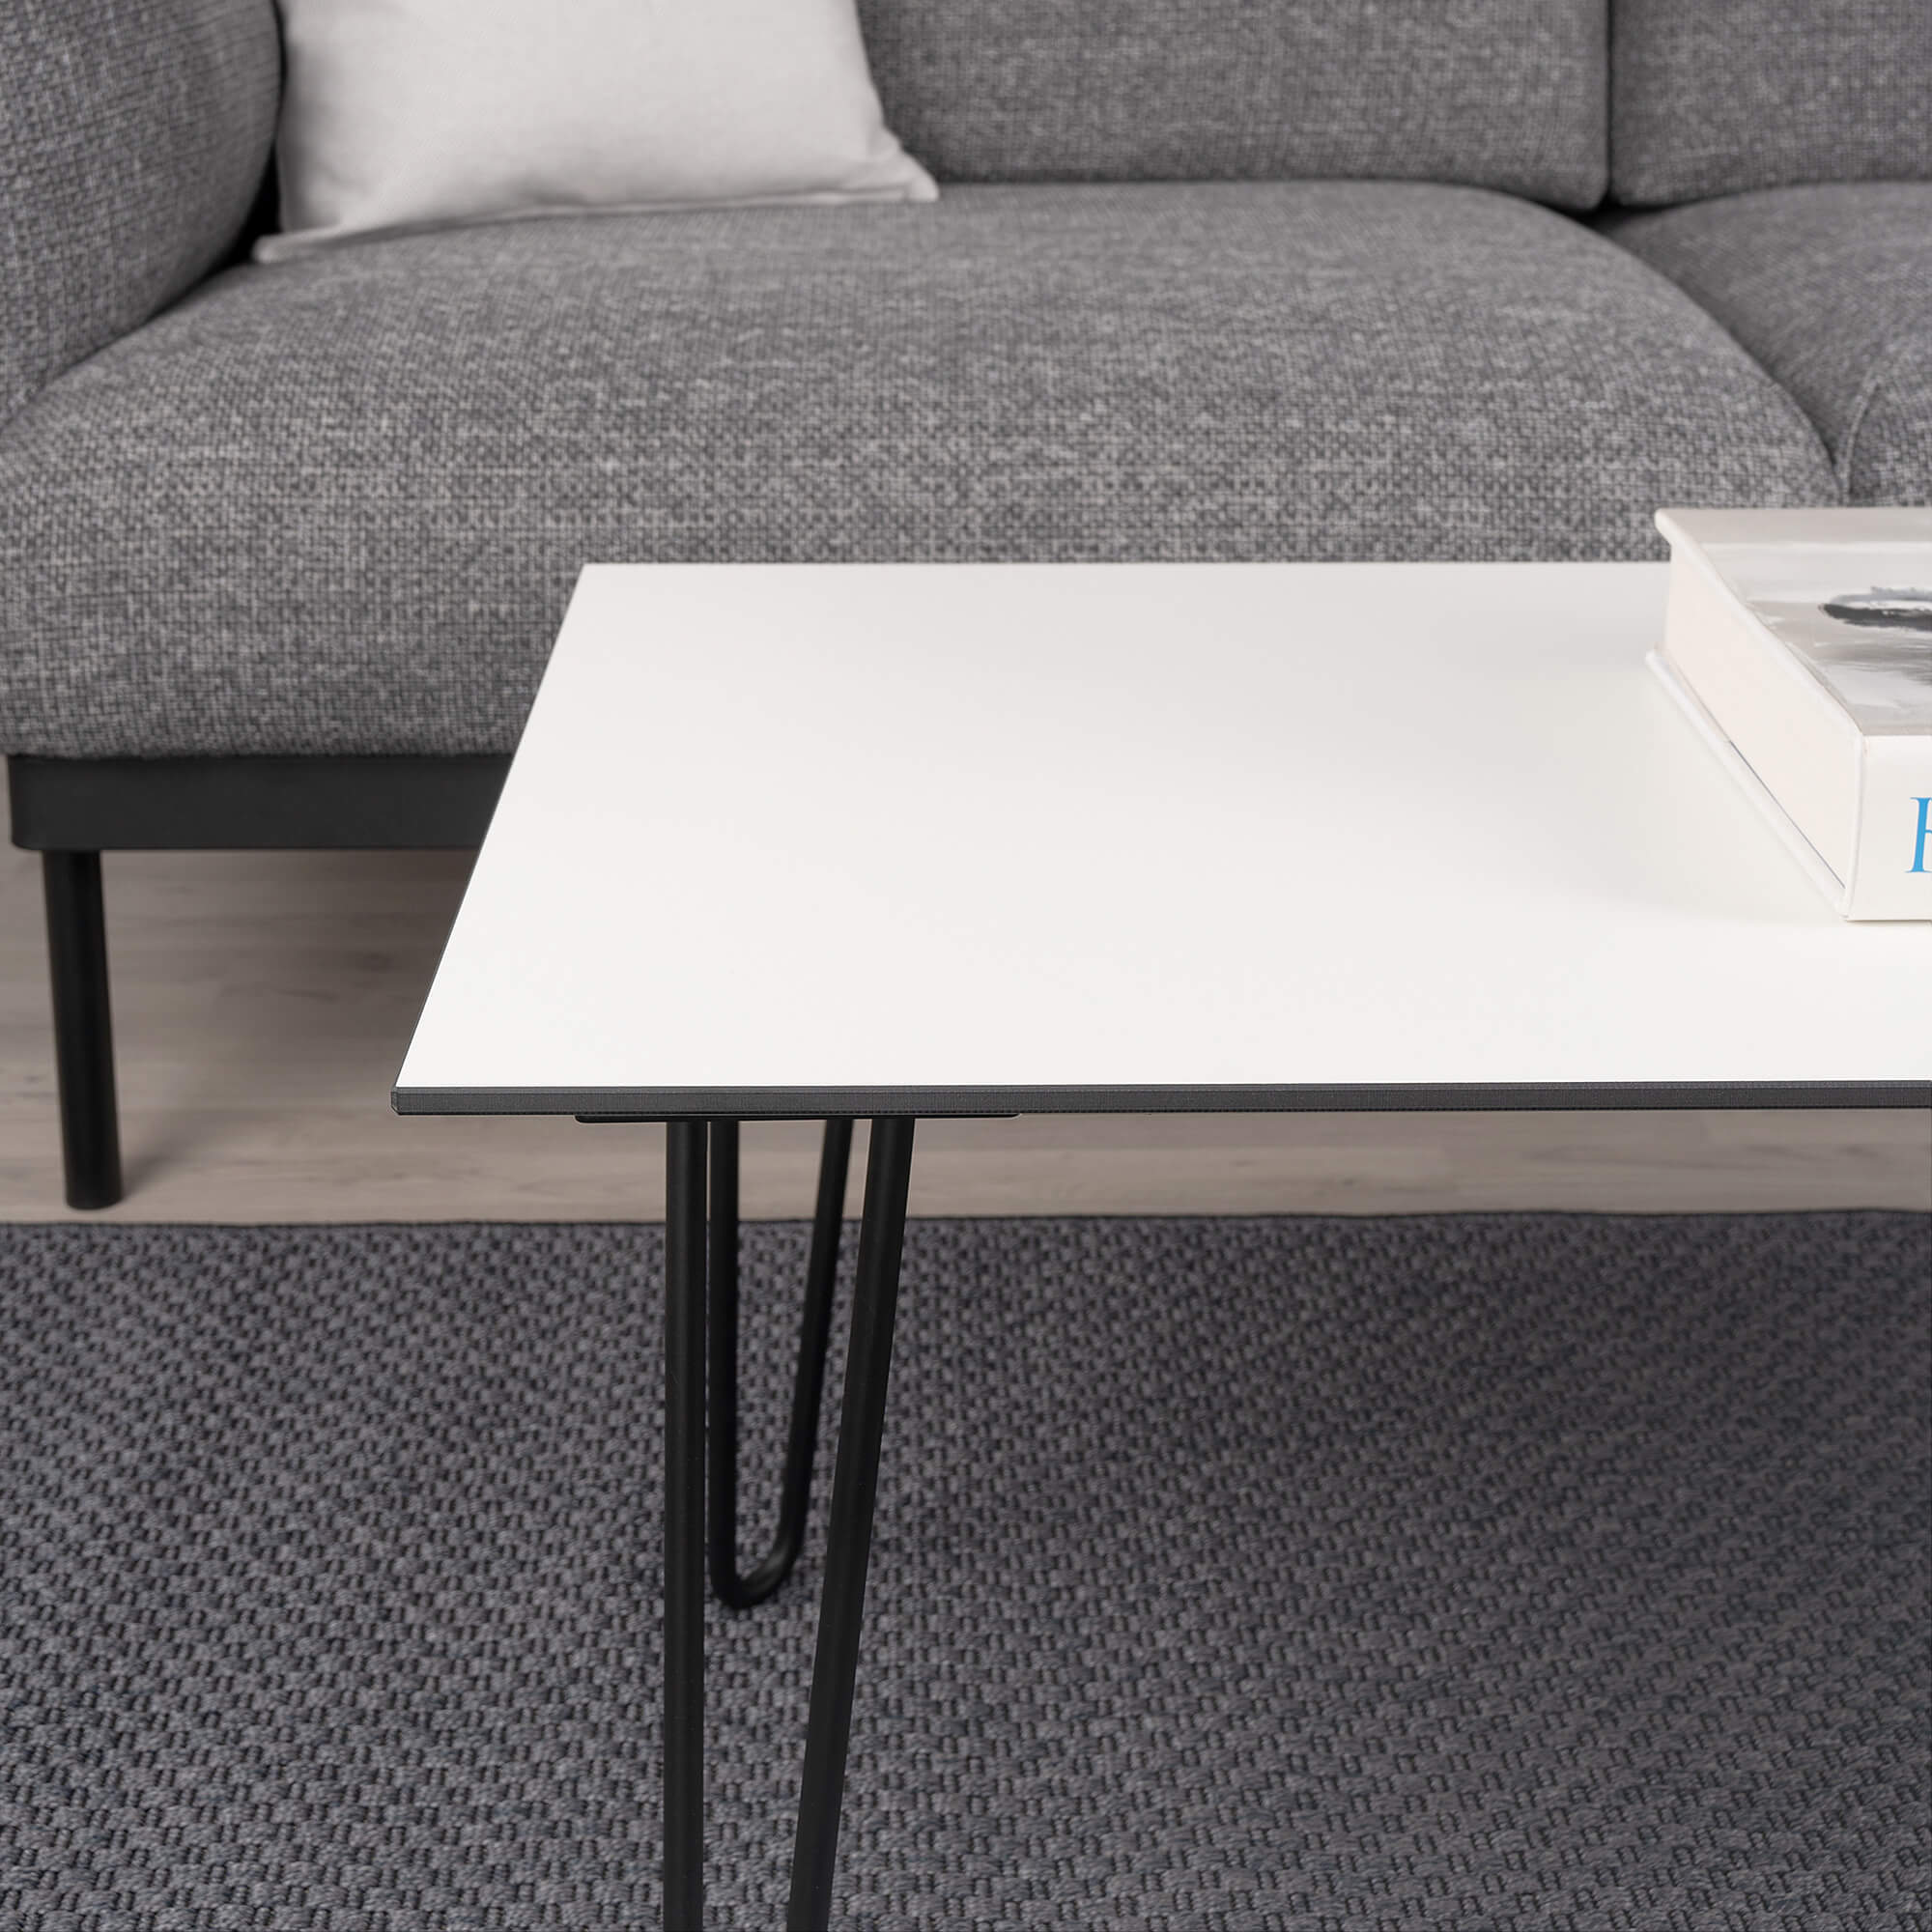 HPL-Holz-Beistelltisch-Tischplatte-hauchduenn-weiss-schwarz